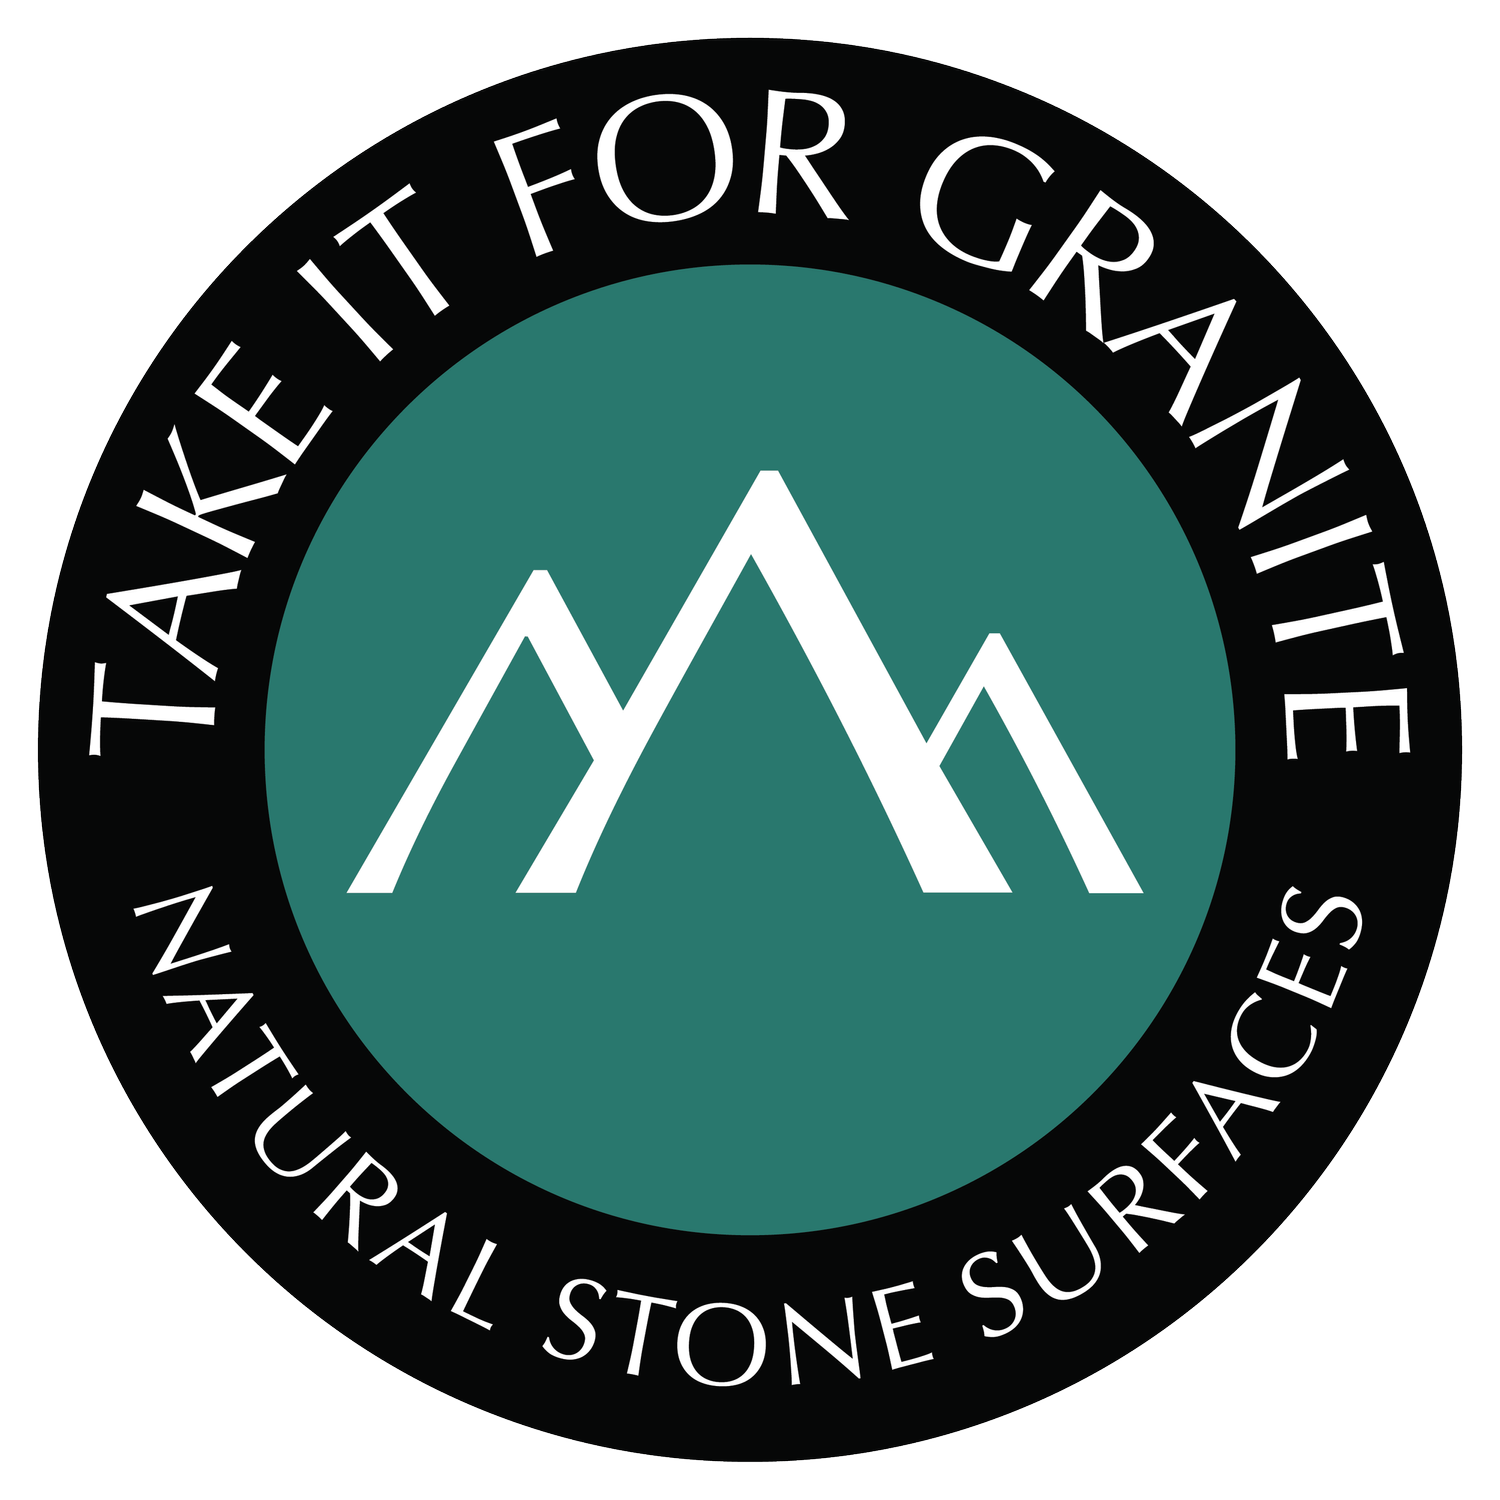 Take It For Granite